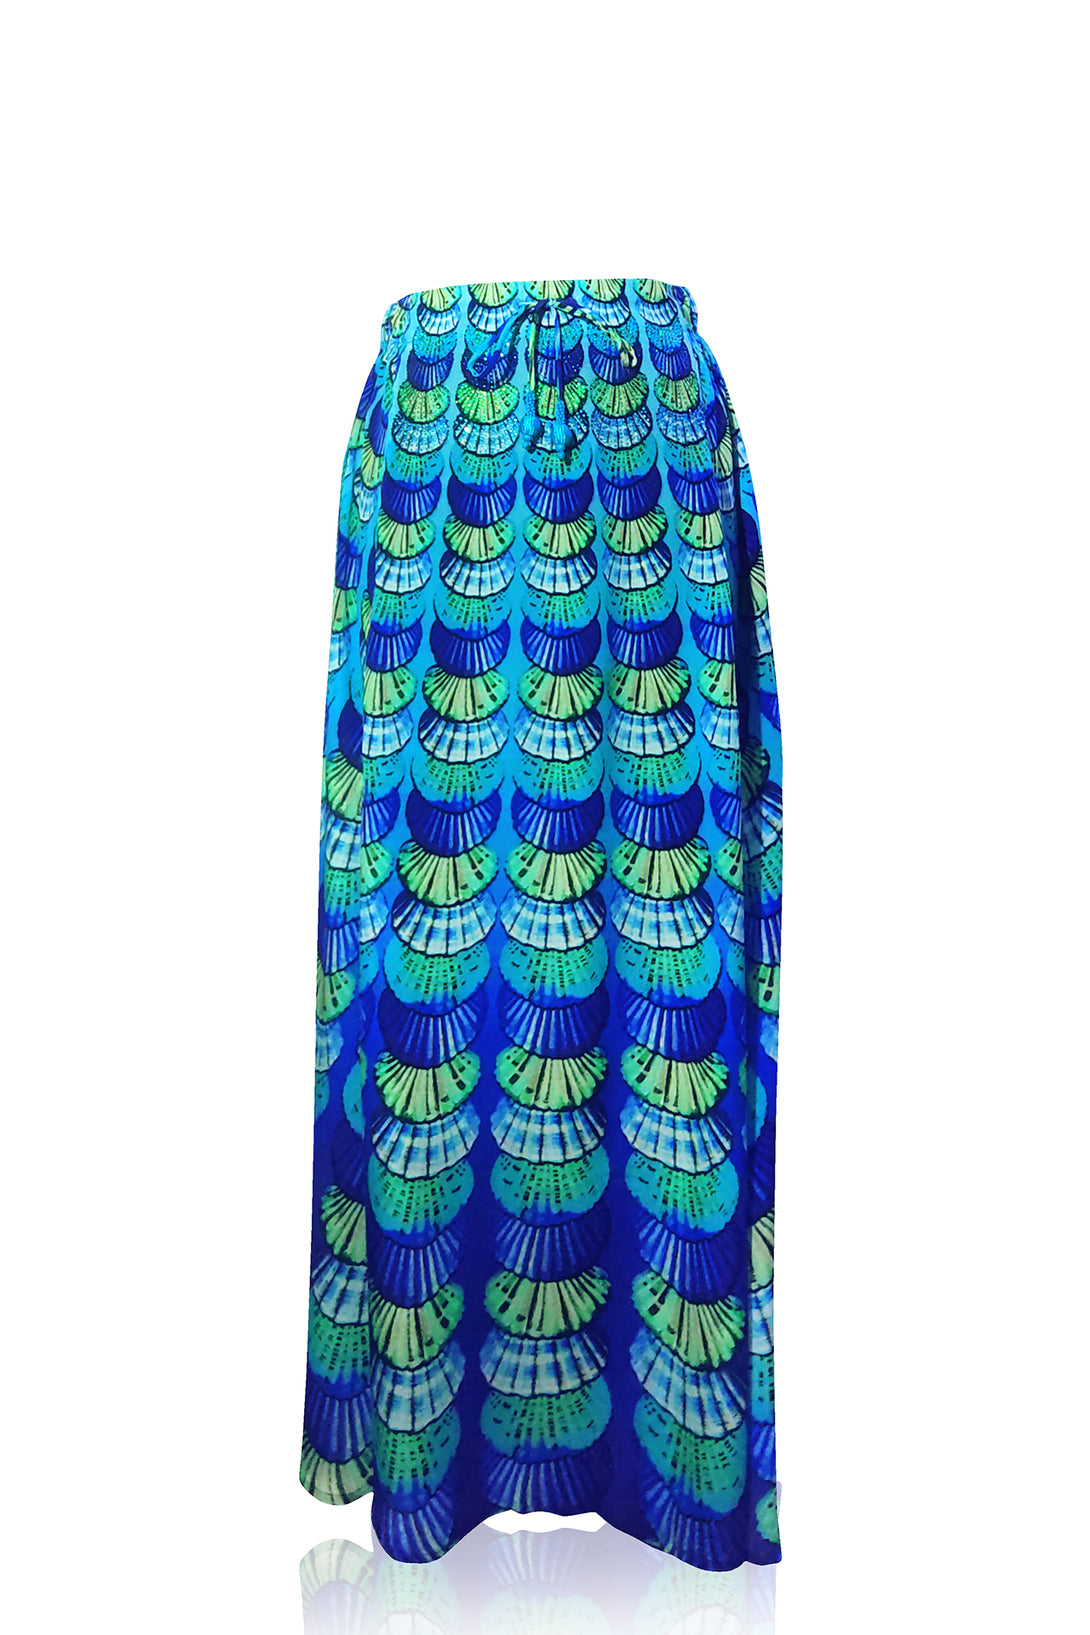 "multi coloured pleated skirts" "Shahida Parides" "floor length skirt" "skirts long maxi"